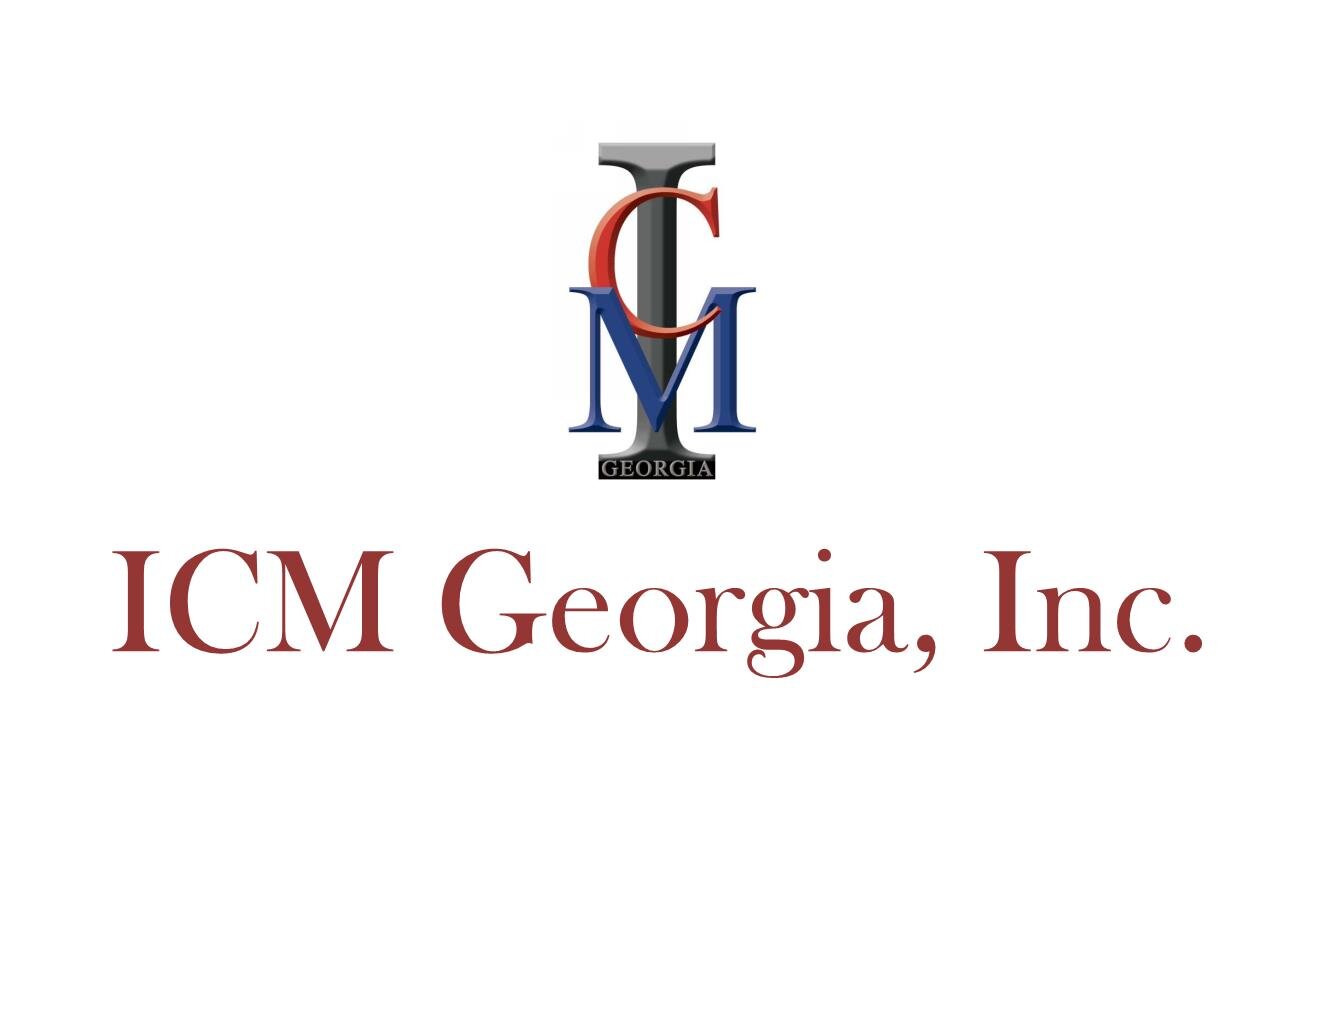 ICM Georgia - hole sponsorship logo 2.jpg